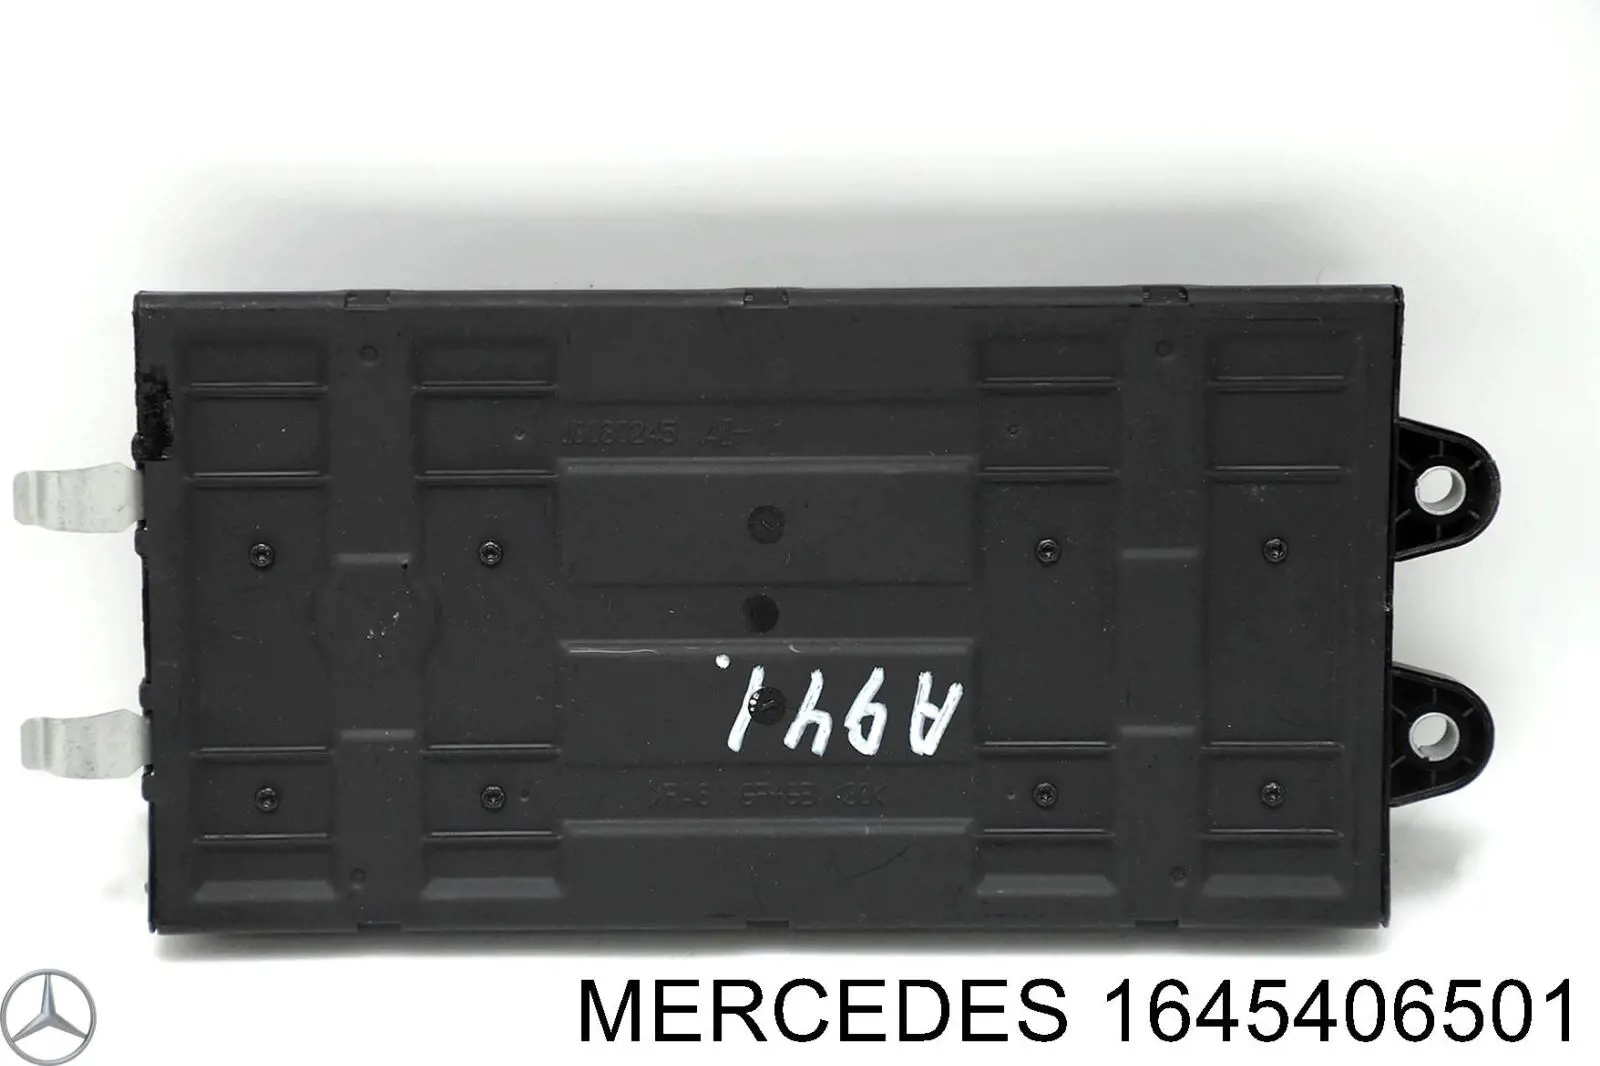 A1644403801 Mercedes блок управления сигналами sam